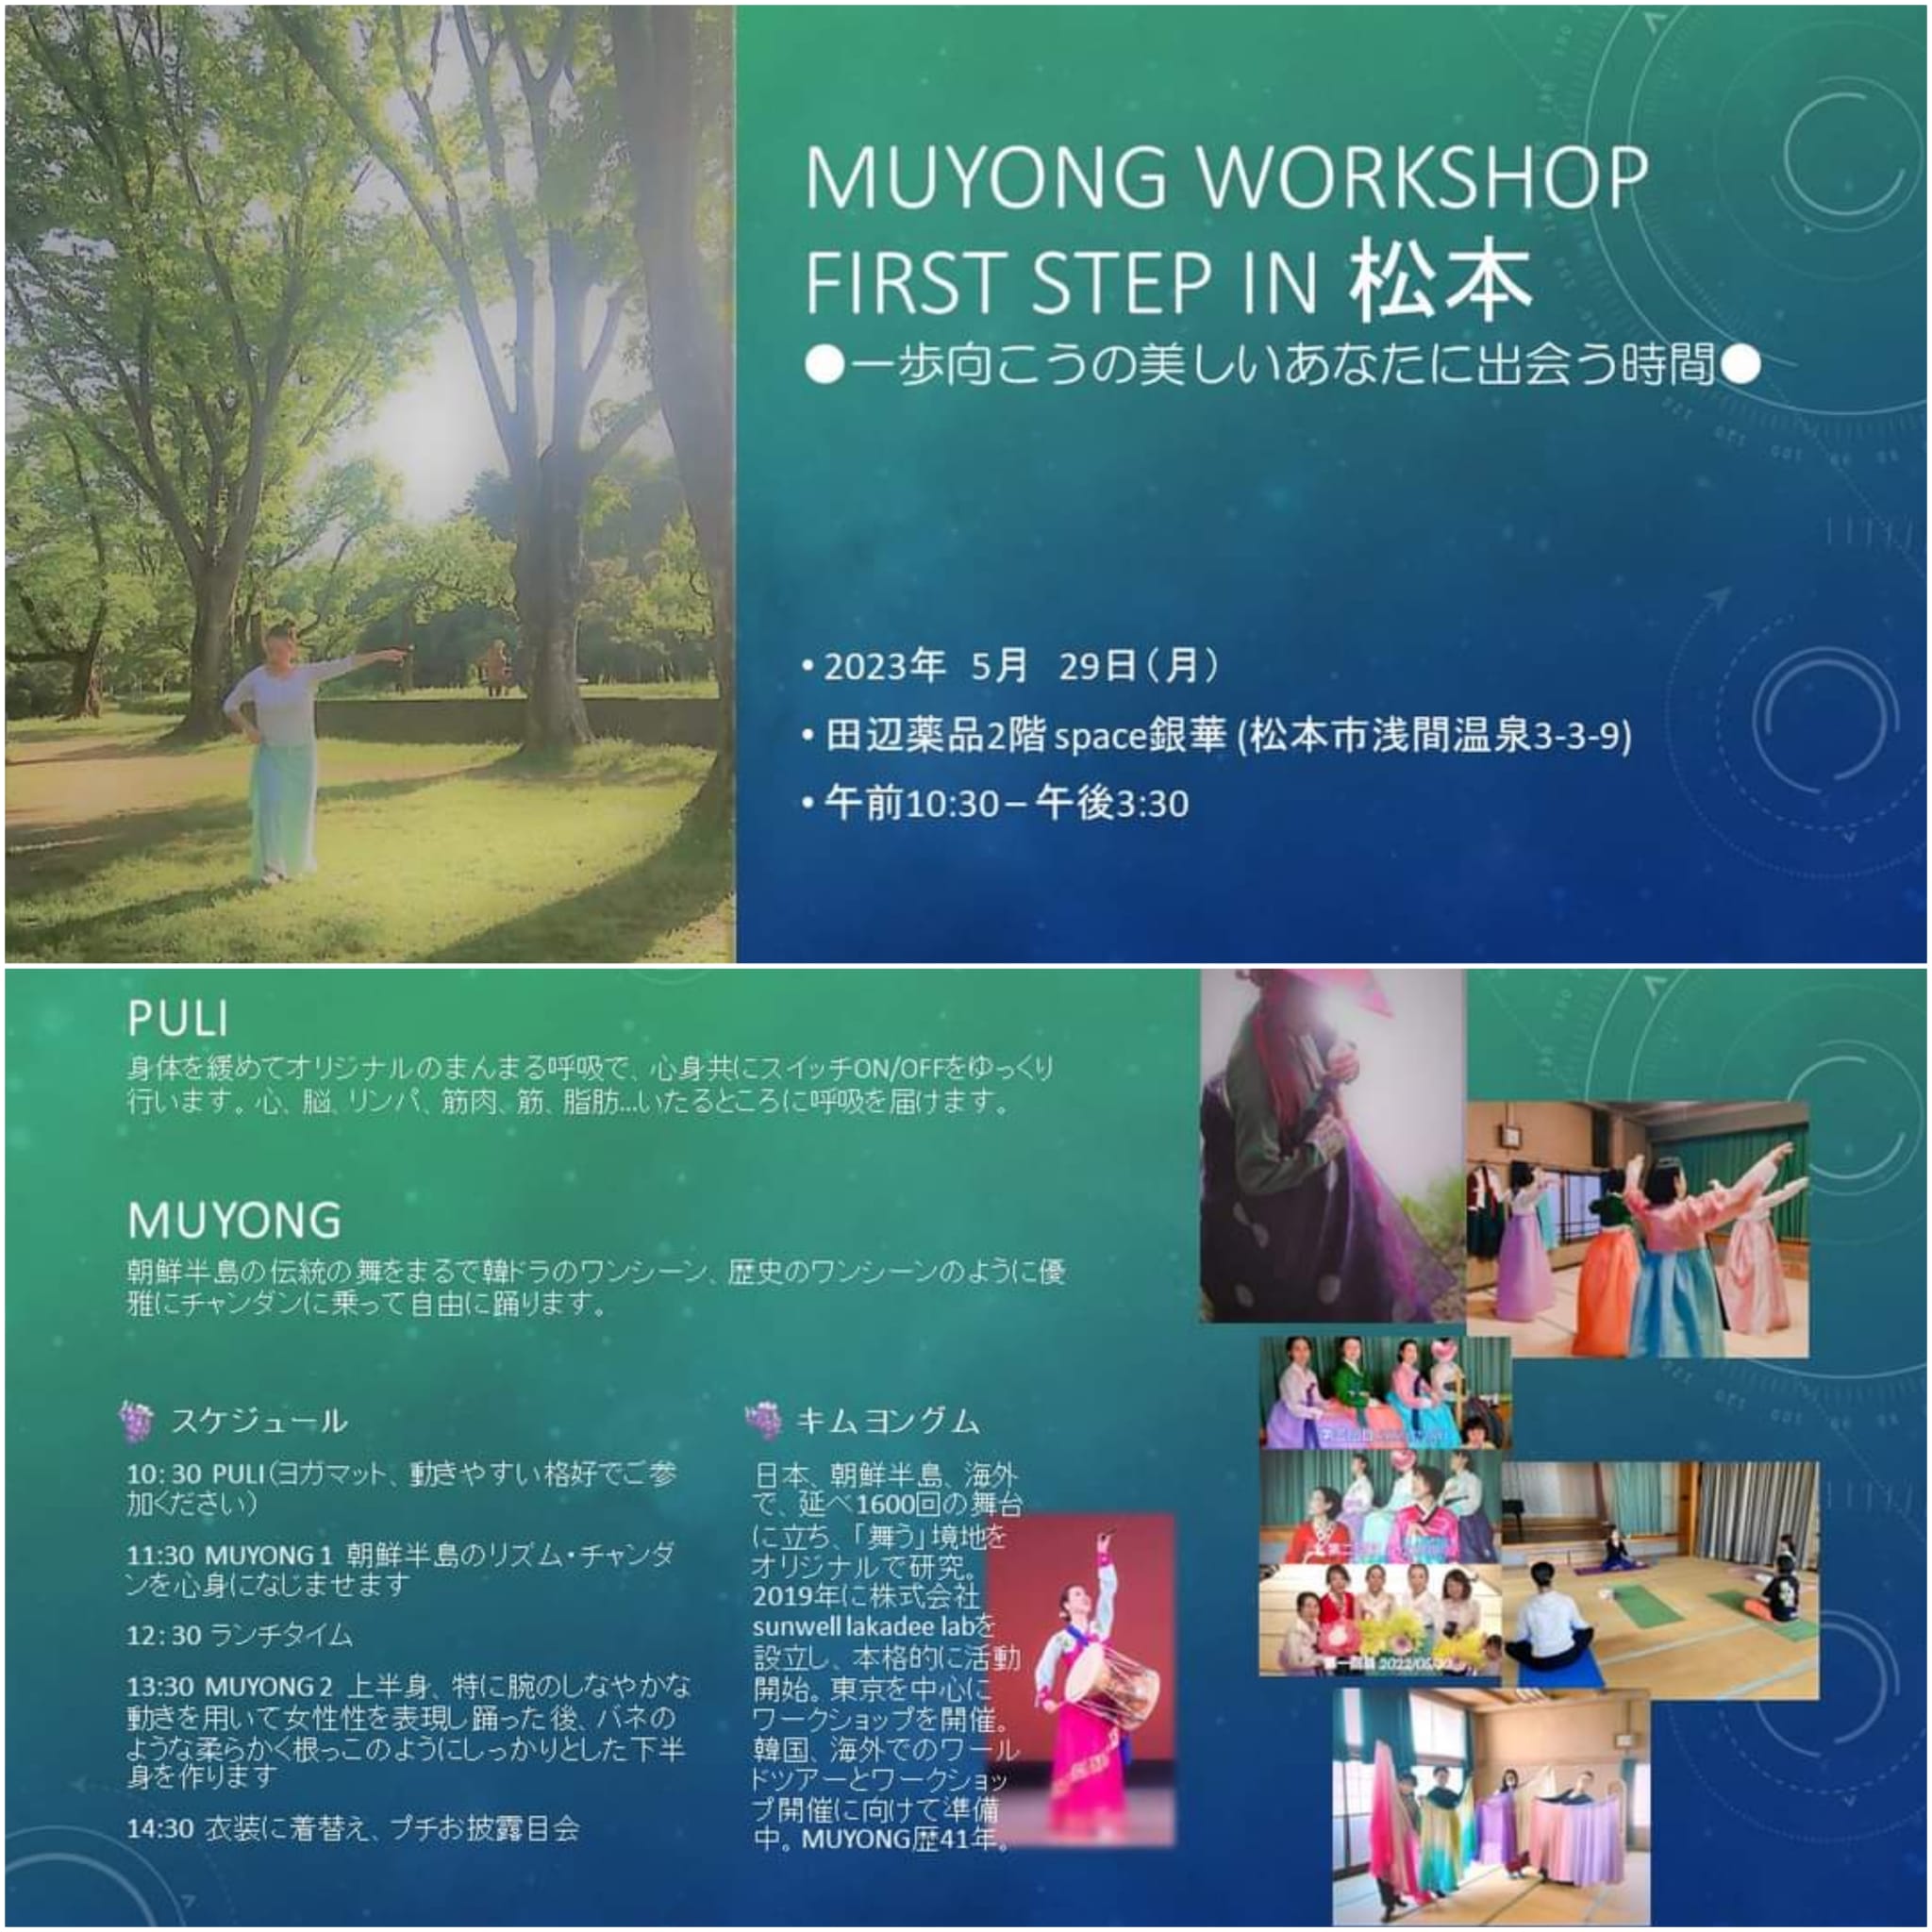 MUYONG WORKSHOP -First Step- in 松本